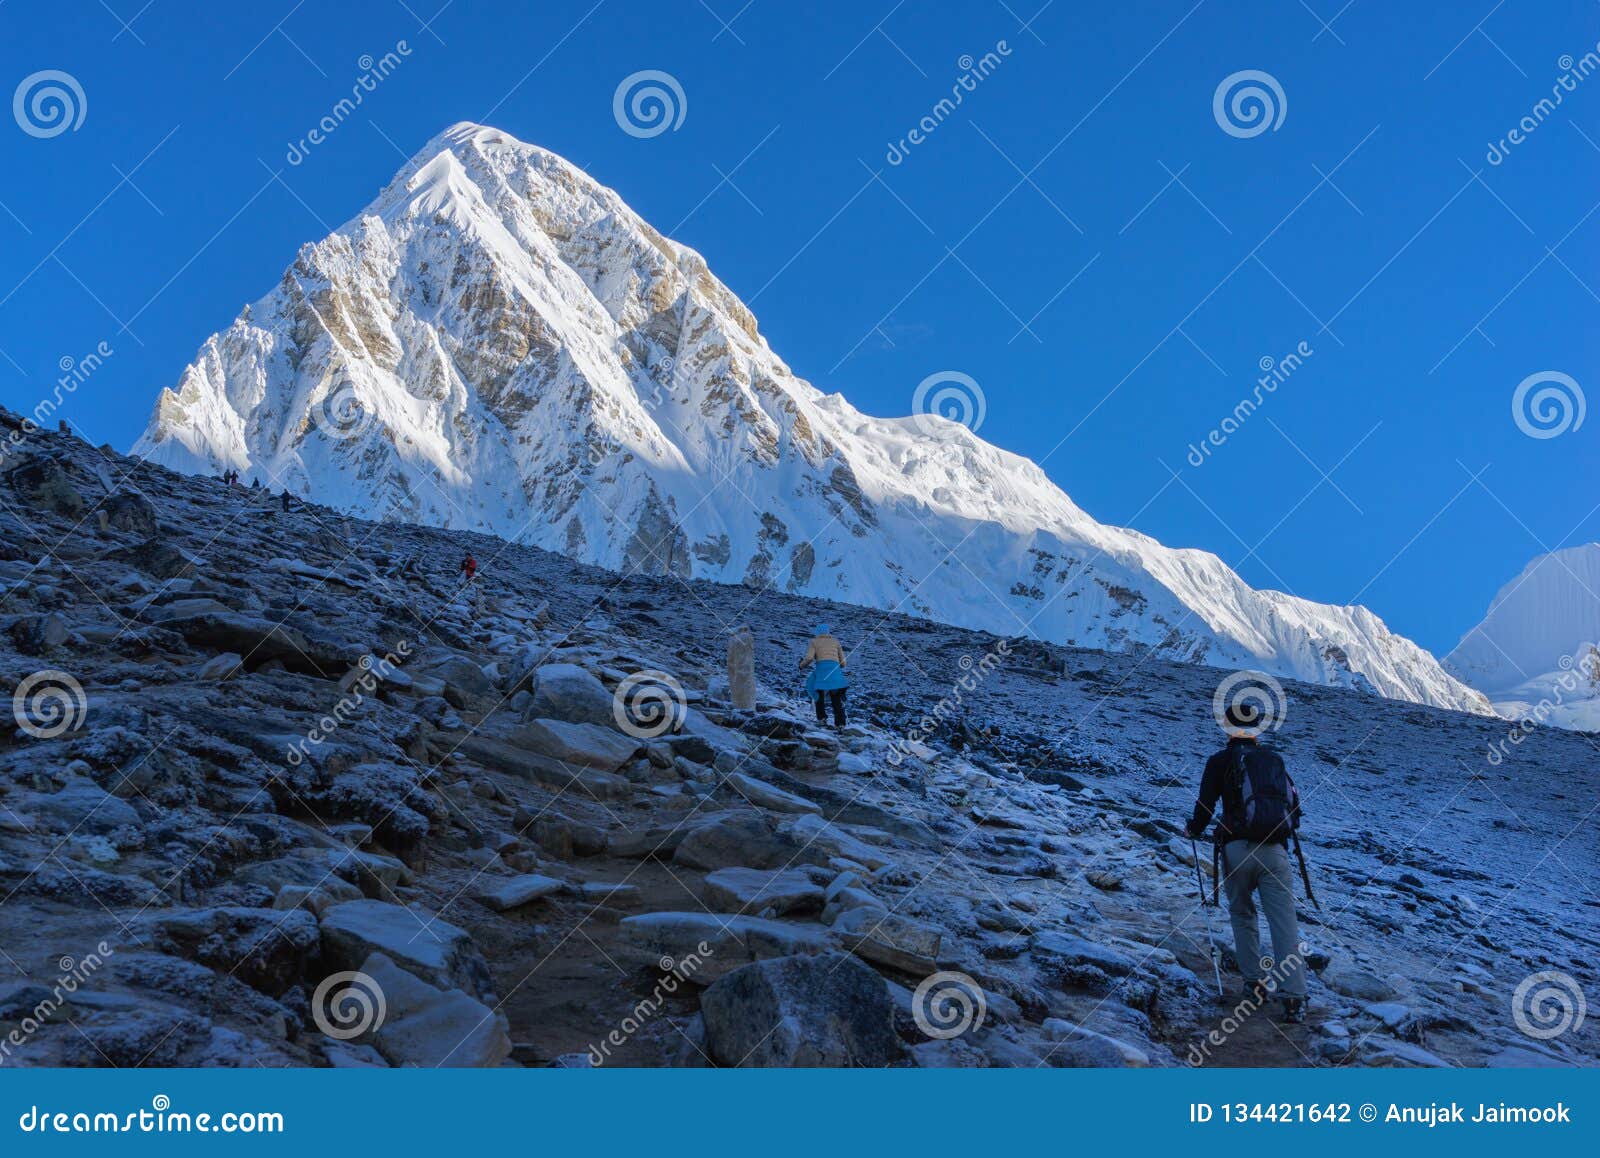 Mt Everest Base Camp Mountain Artwork Hiking Trail to Mount Everest in Himalayas Nepal EBC Trek Photography